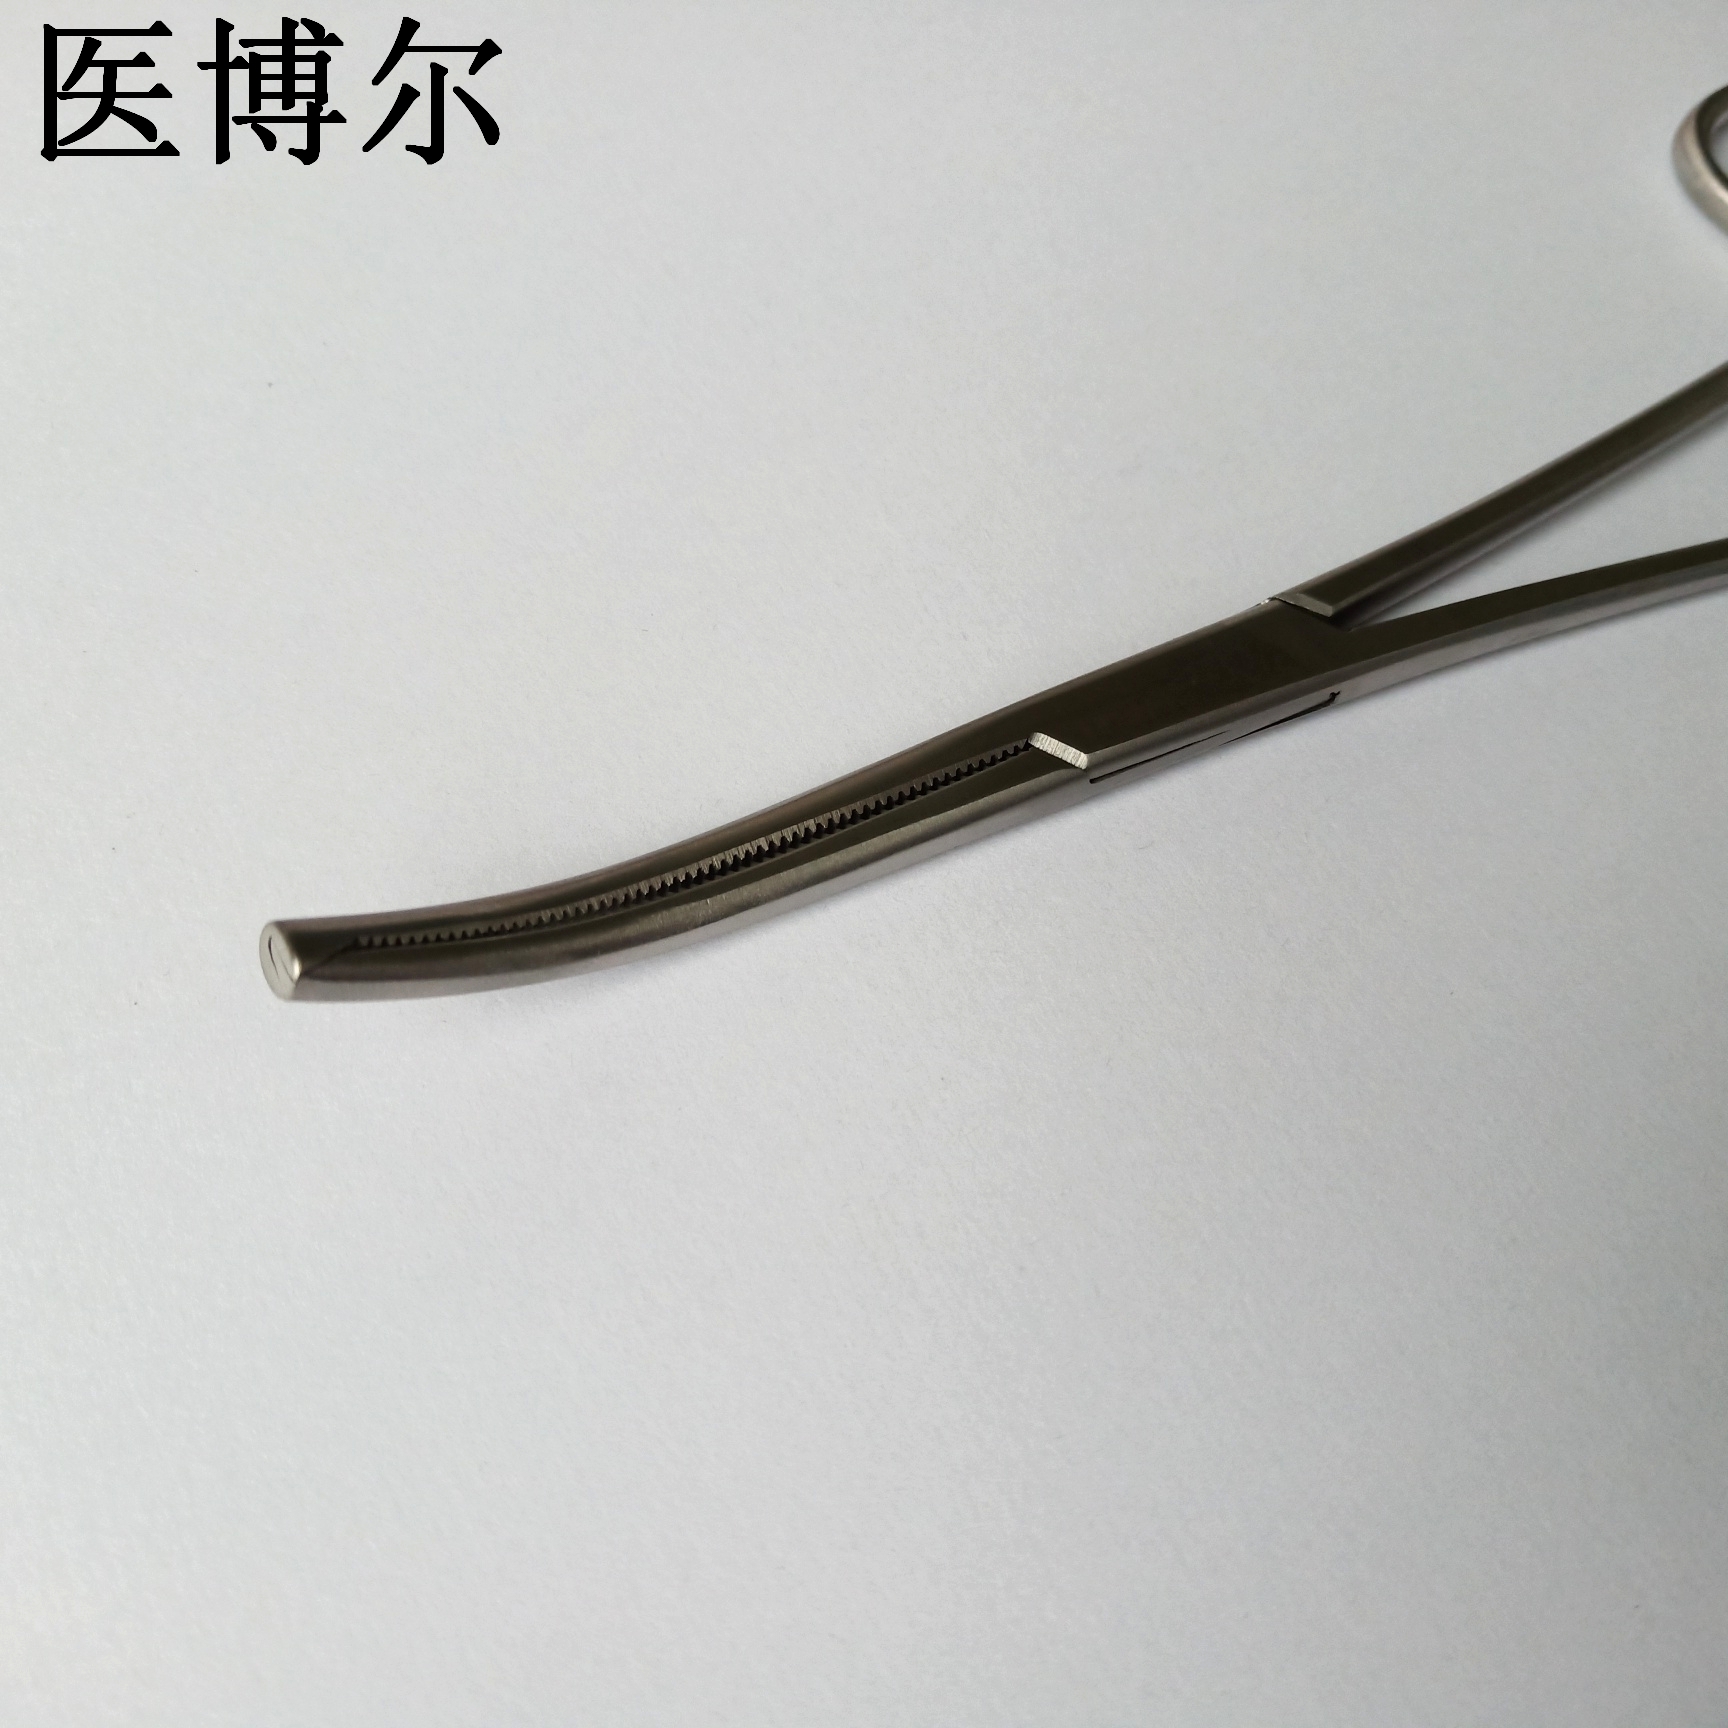 18cm弯克扣钳 (4)_看图王.jpg